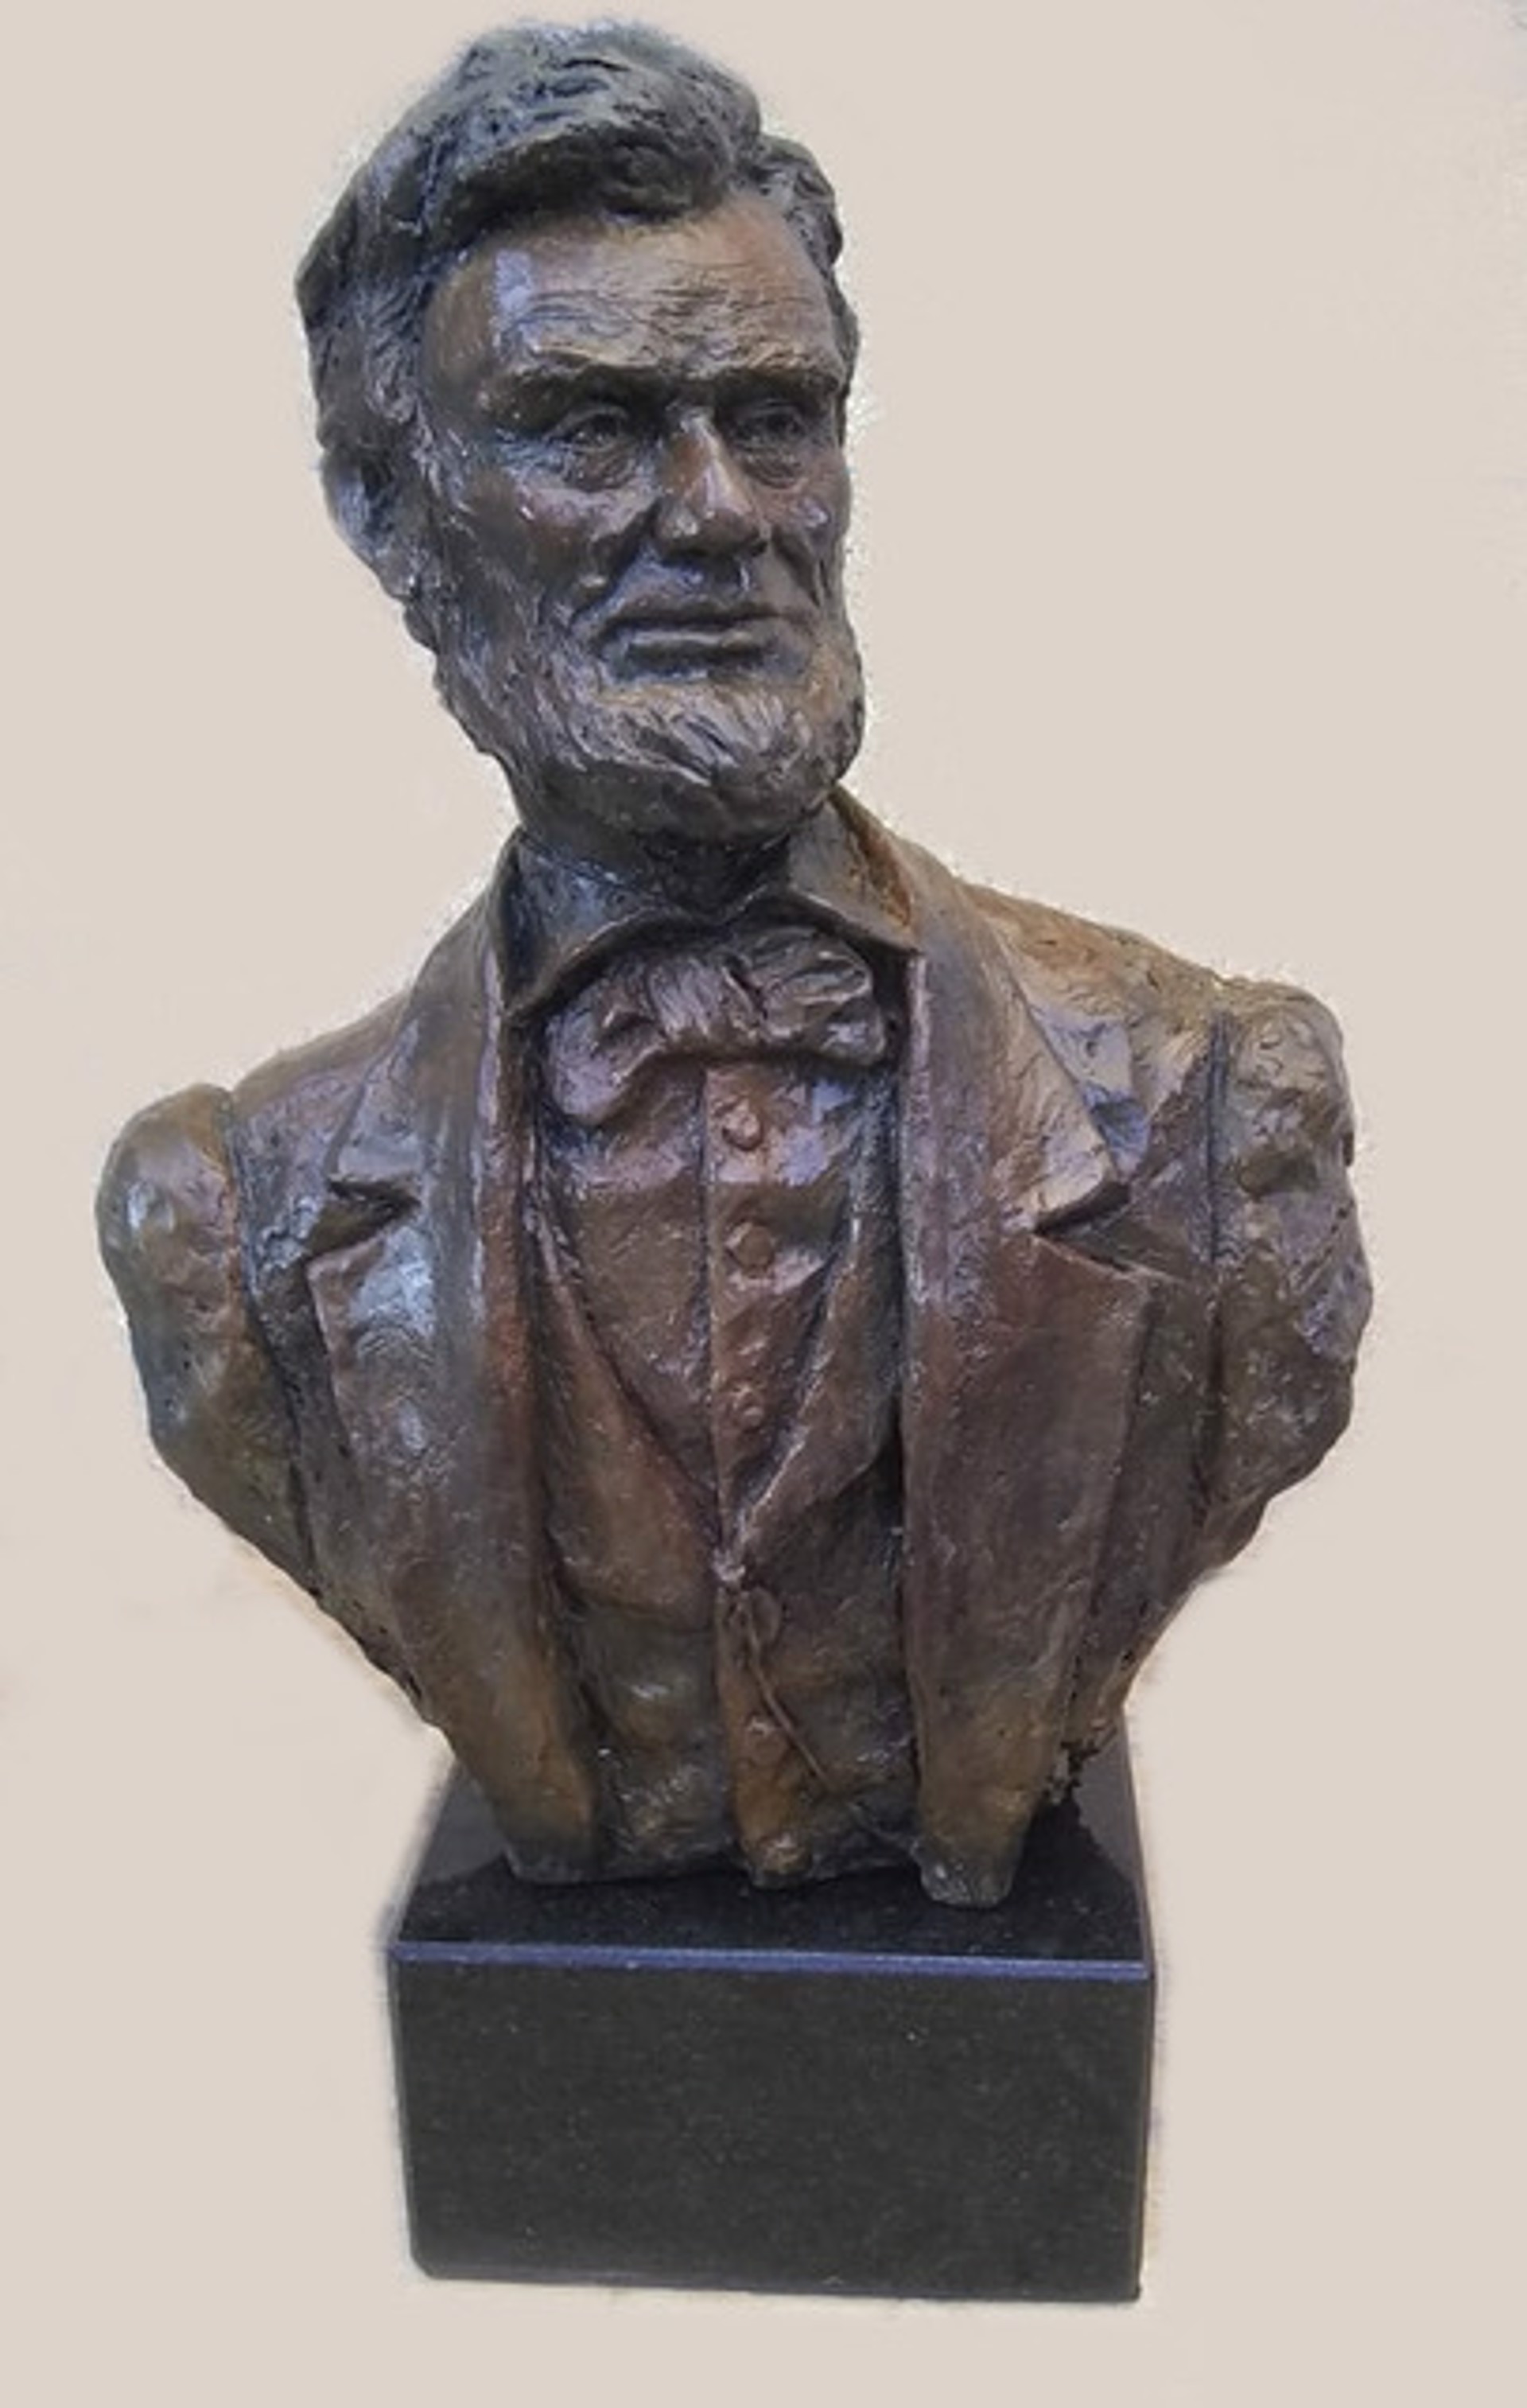 Abraham Lincoln by Armando Gallejos Melendez